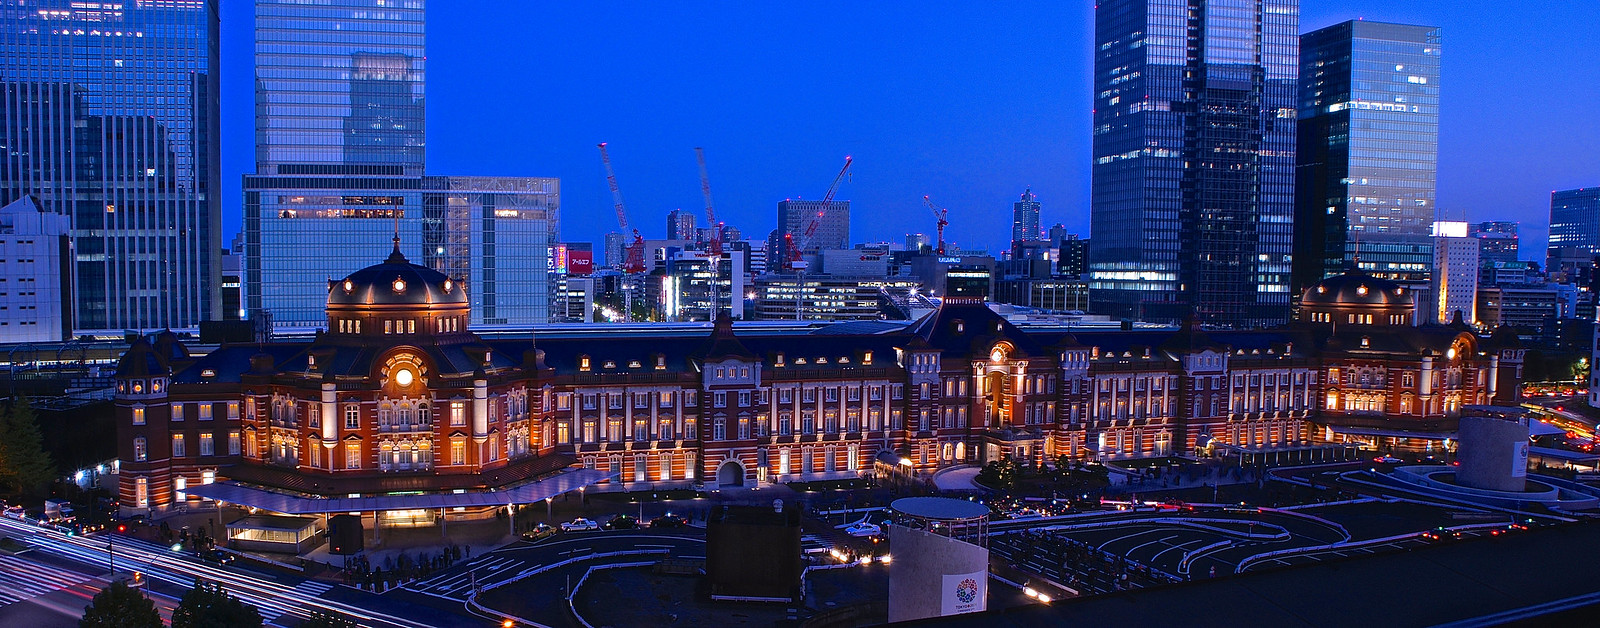 Tokyo station panorama shot